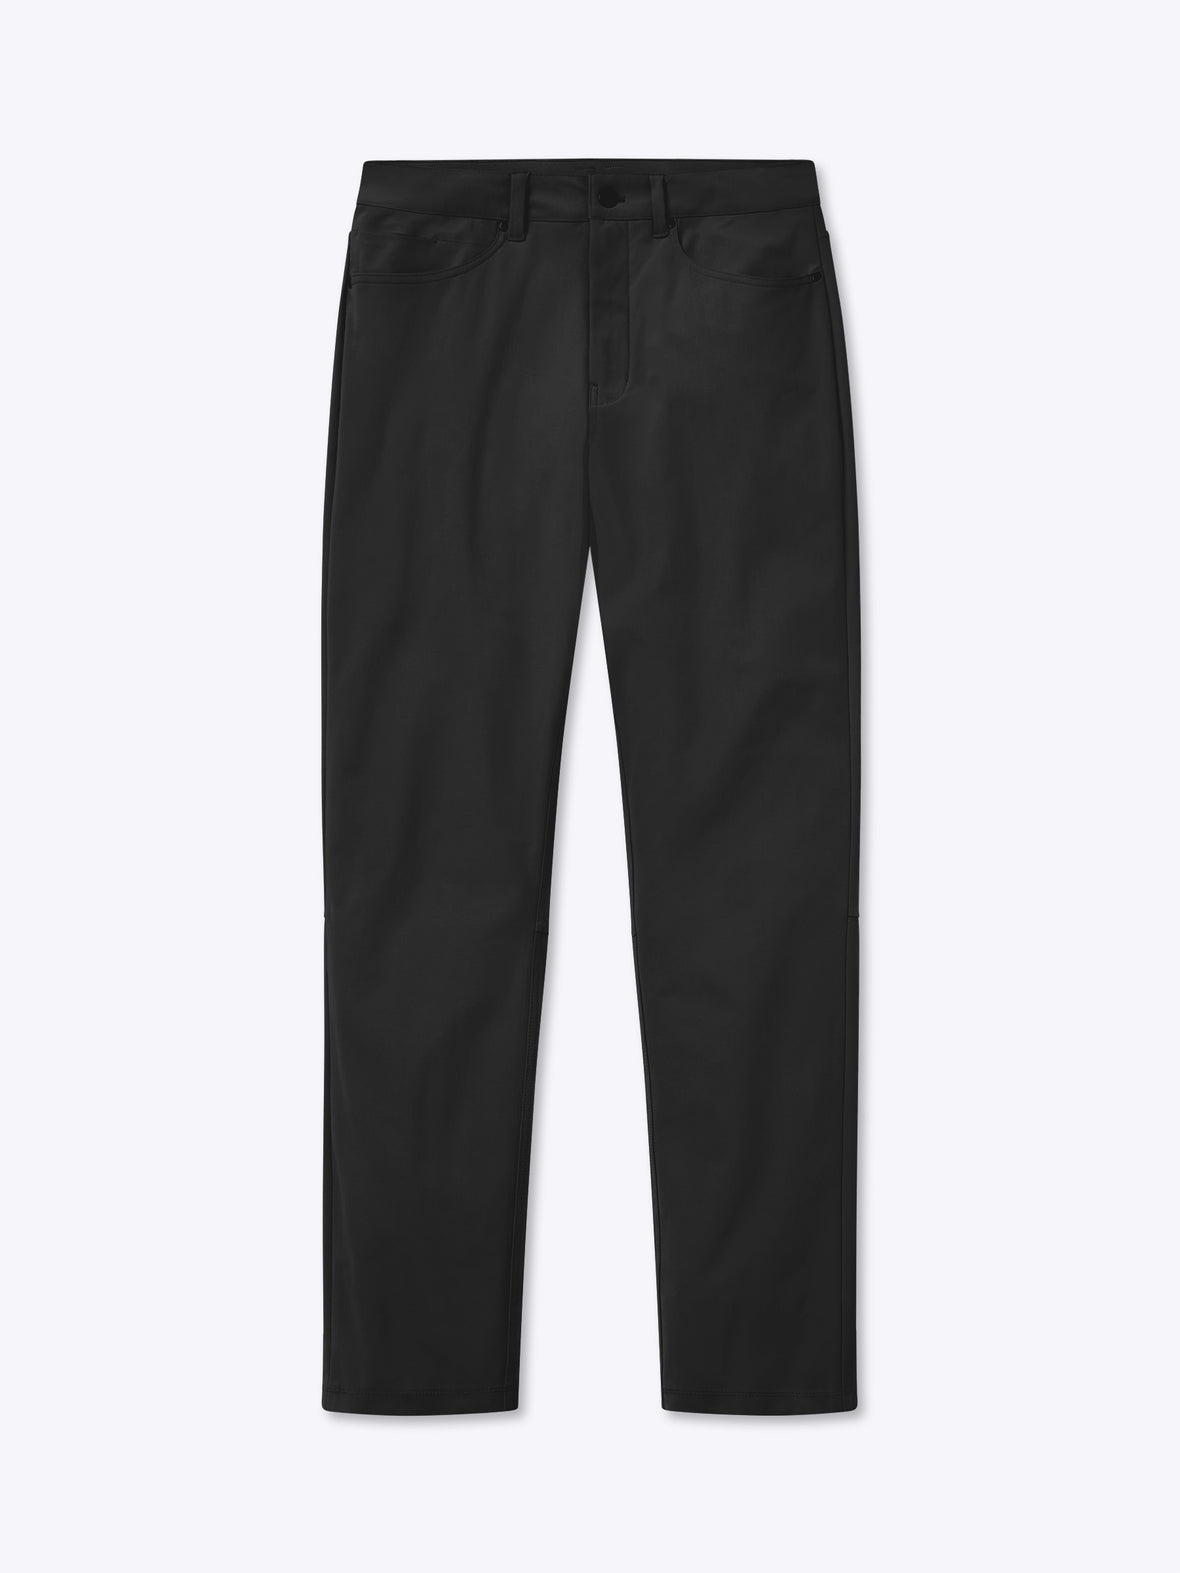 AO 5-Pocket Pant | Black Slim-Fit Versaknit™